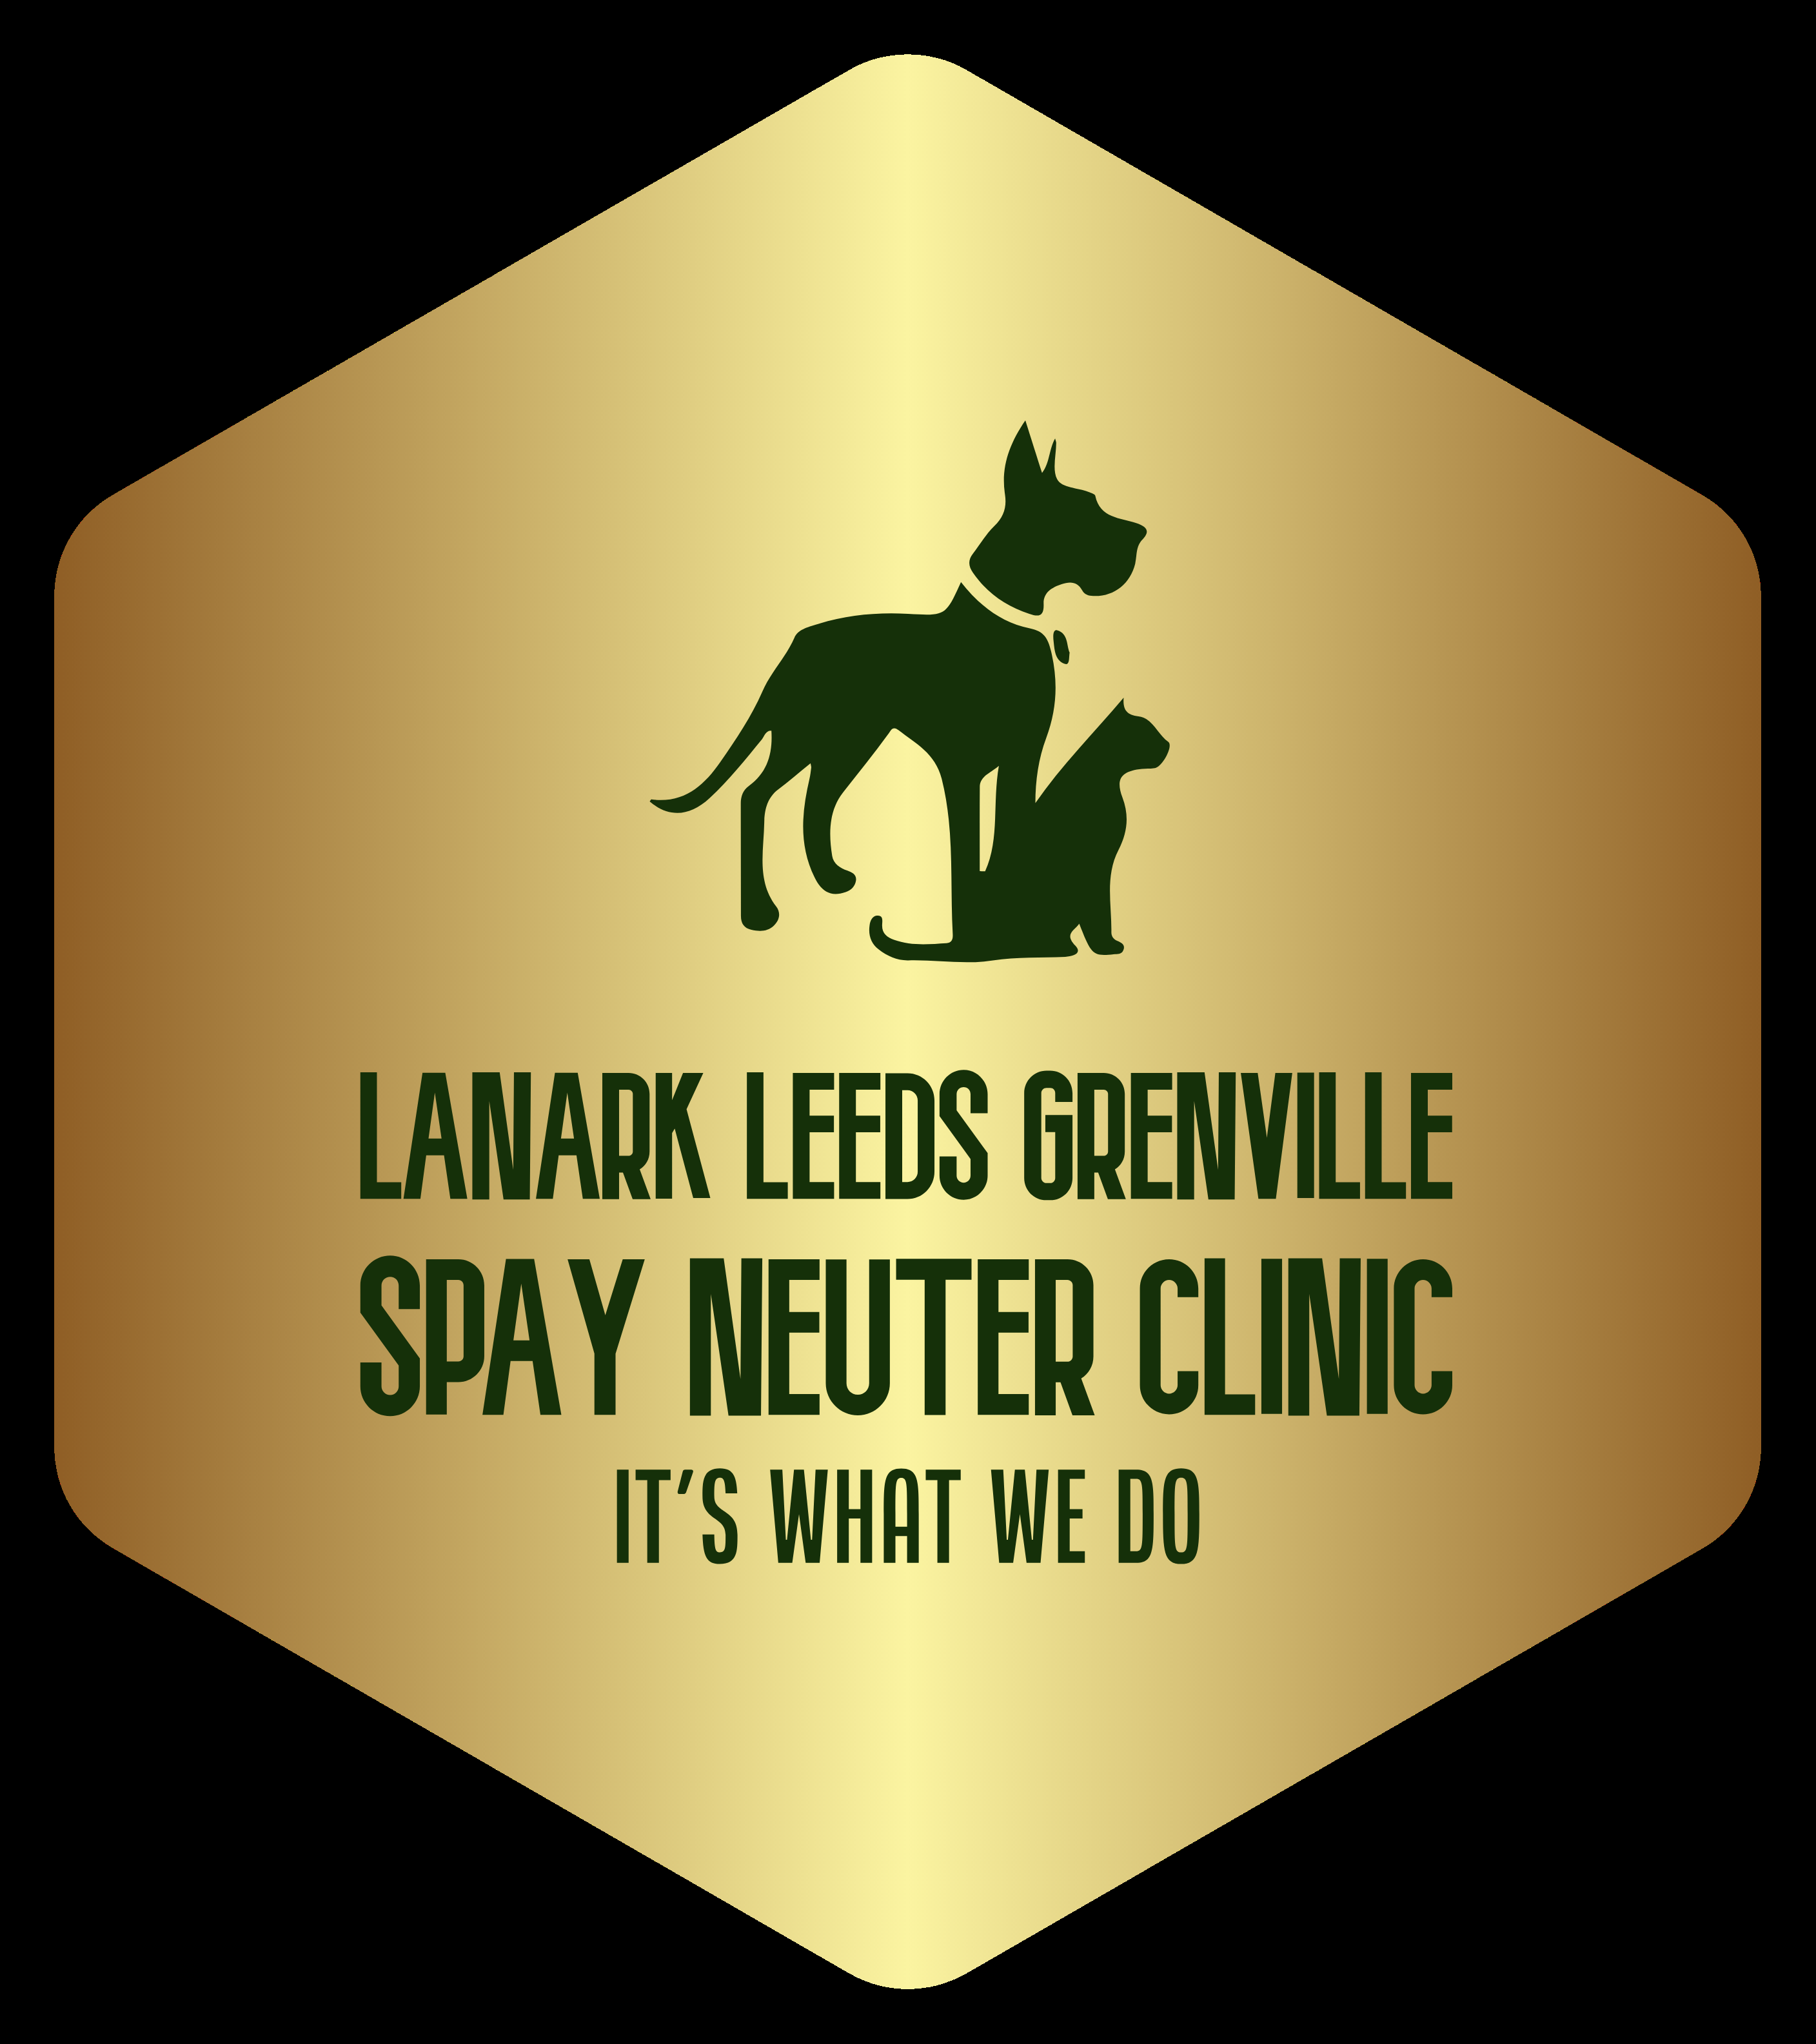 Lanark Leeds Grenville Spay Neuter Clinic